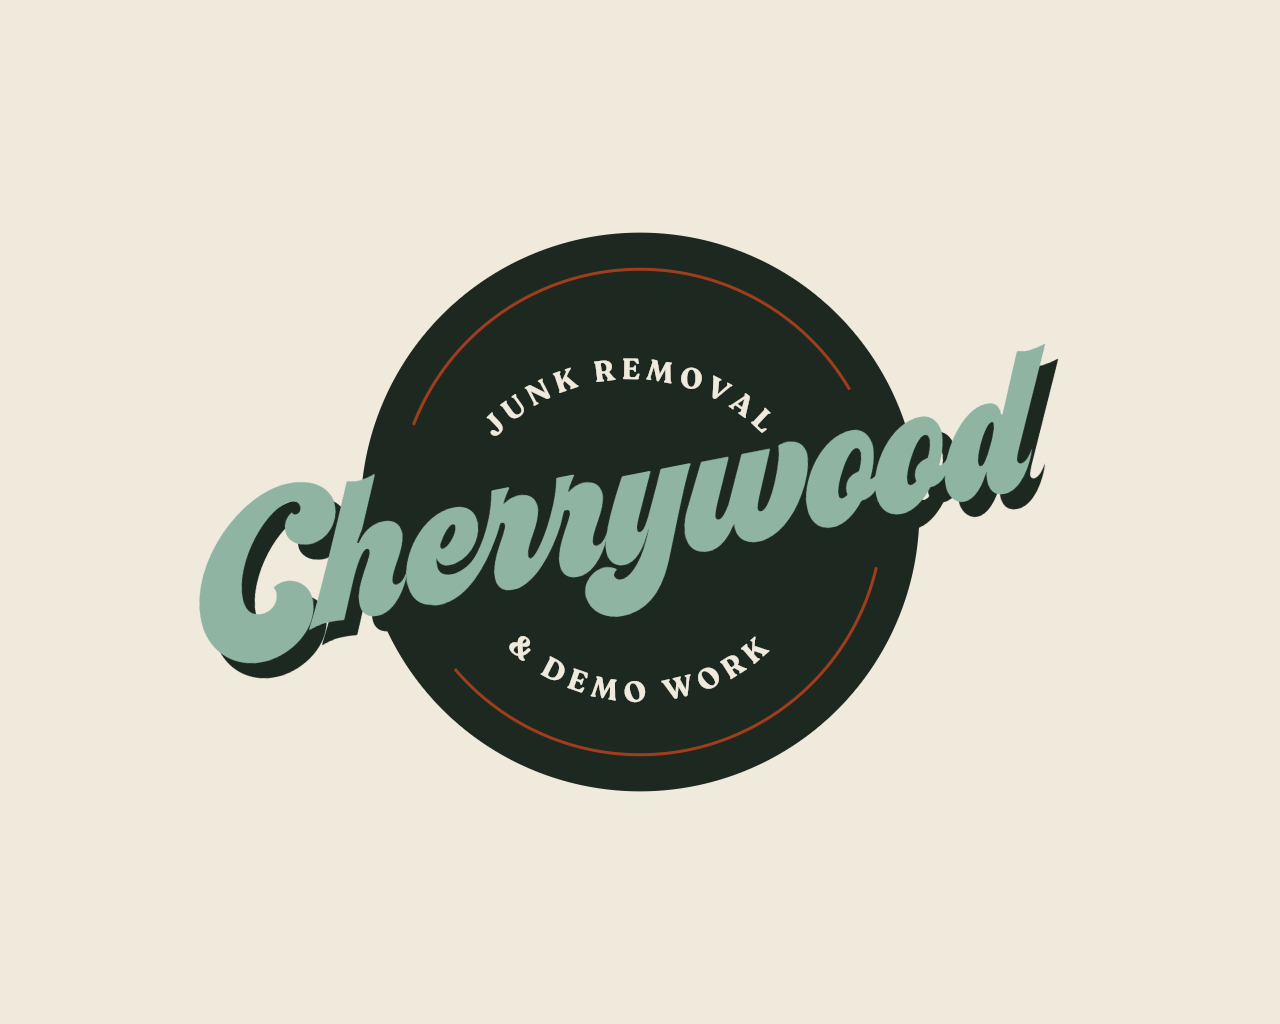 CHERRYWOOD JUNK REMOVAL AND DEMO LLC Logo